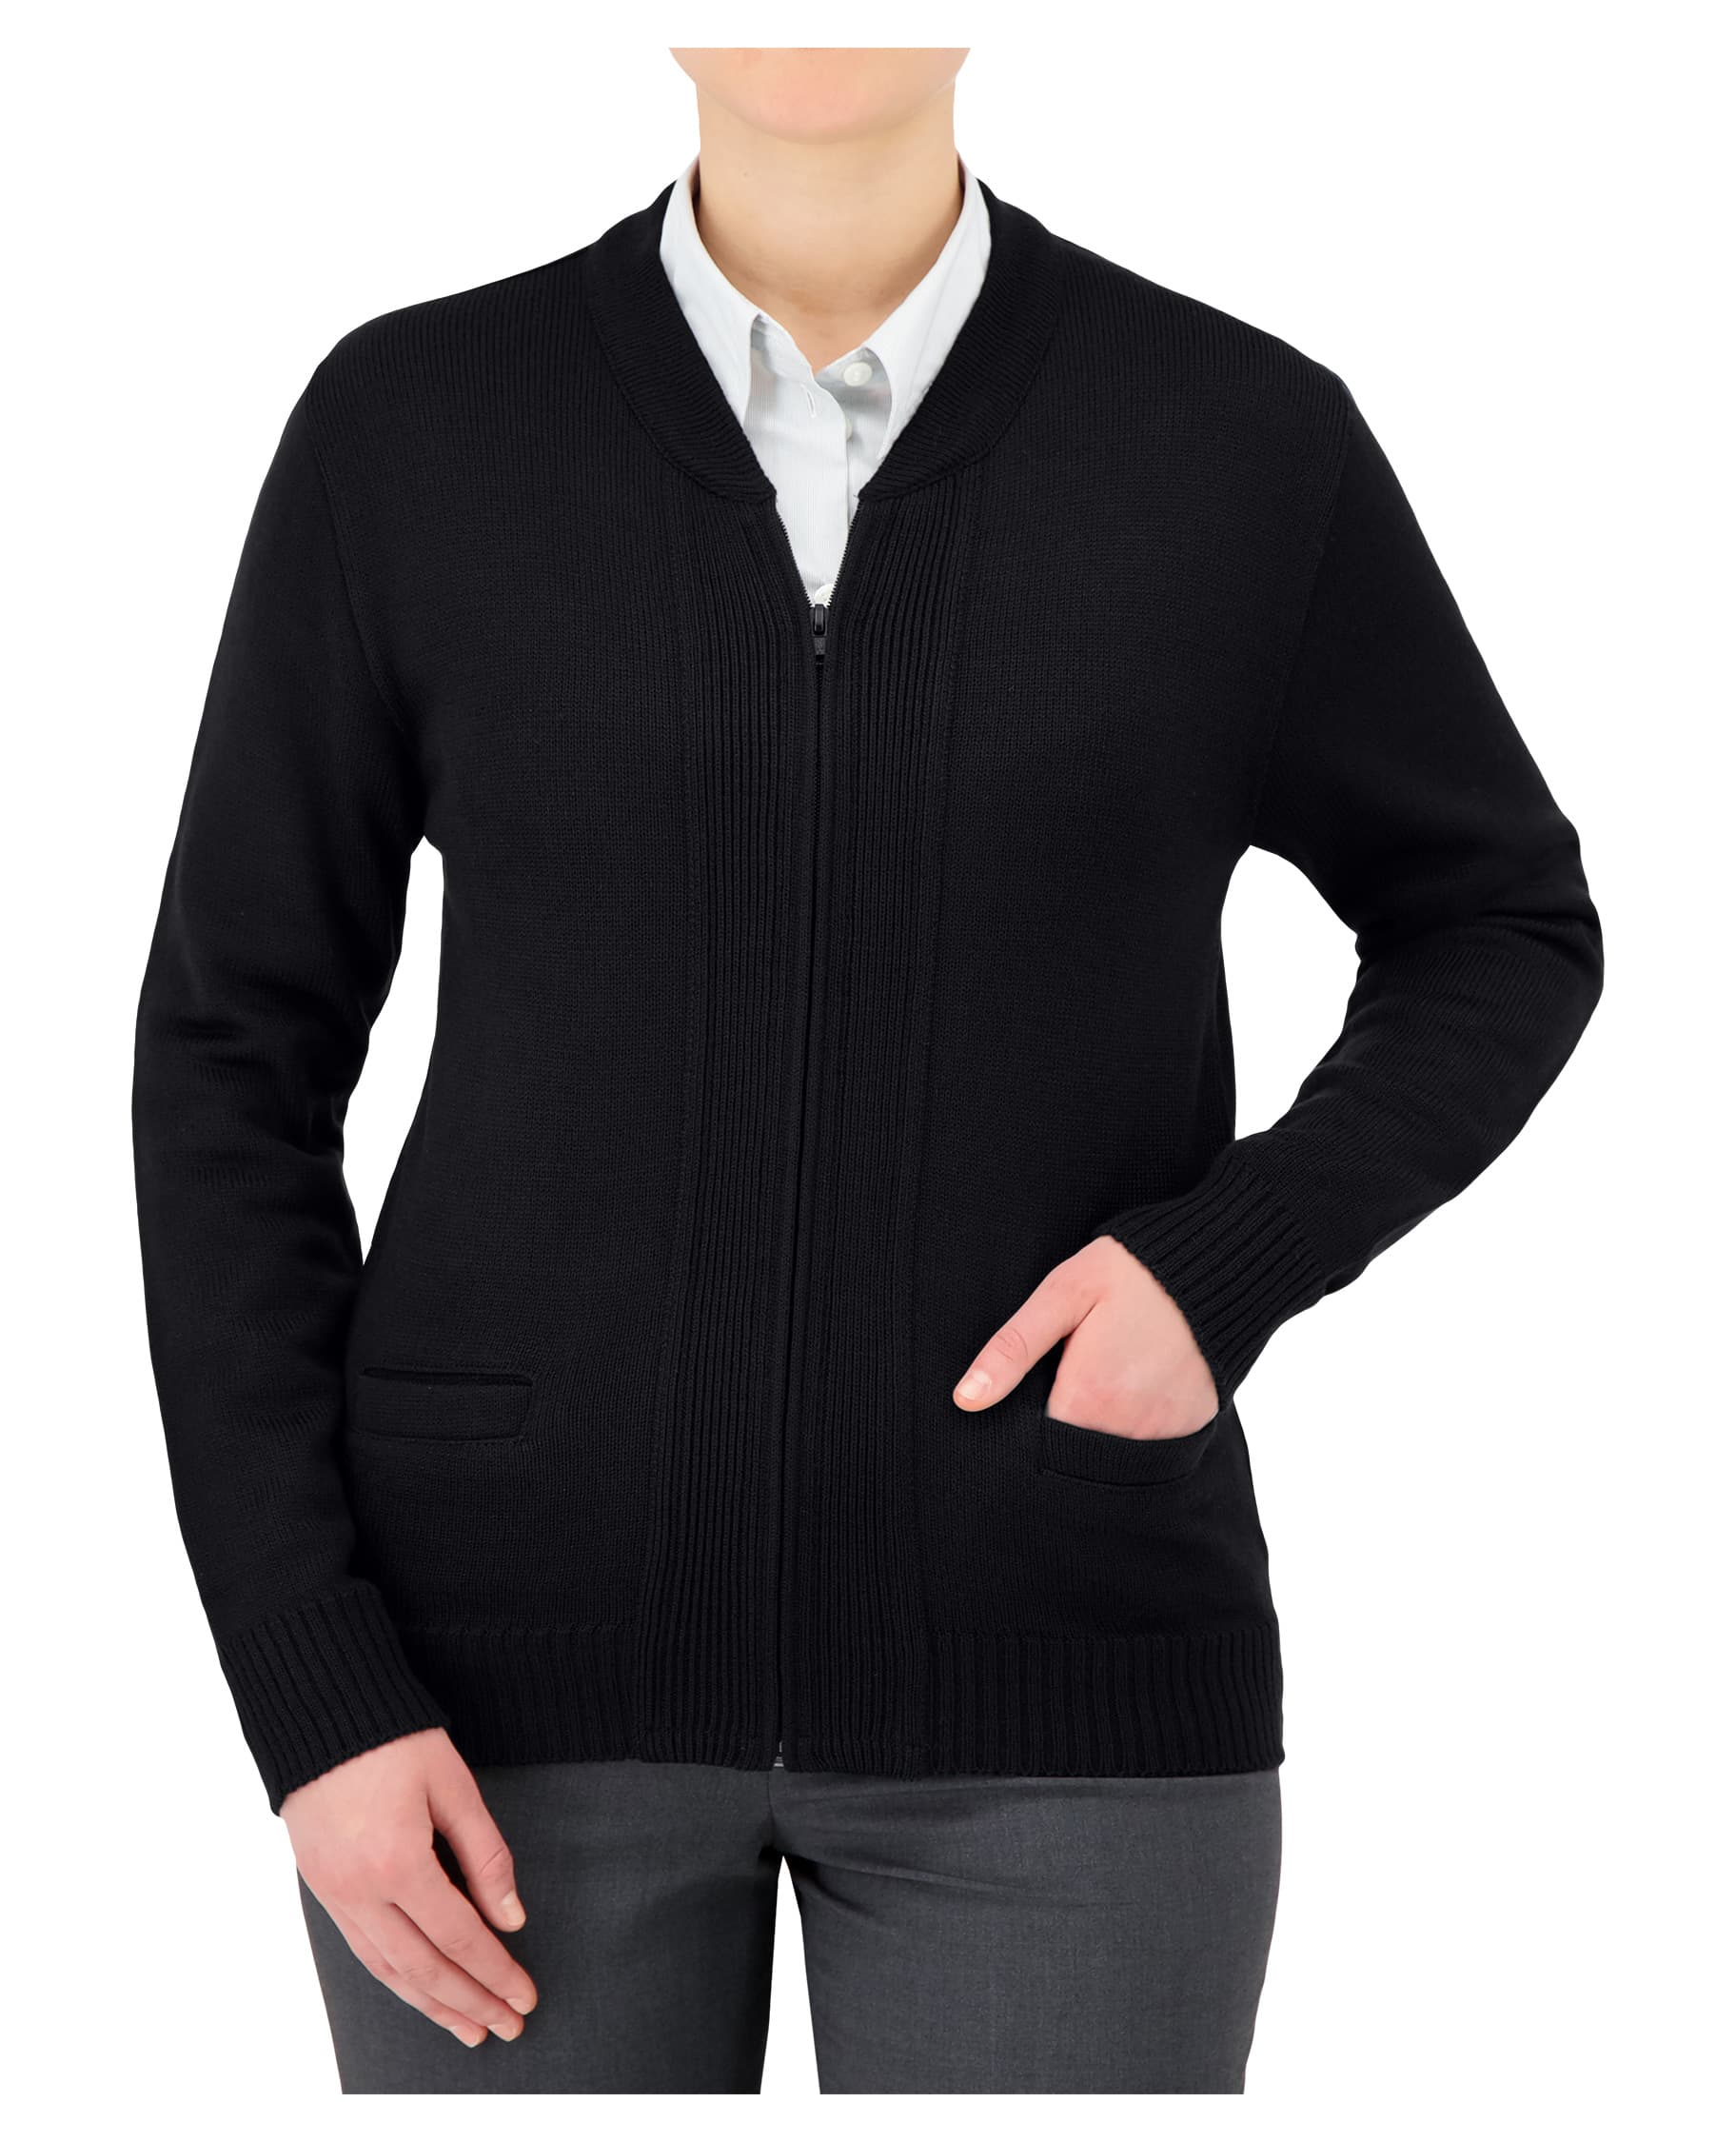 black zip up uniform sweater with pockets 